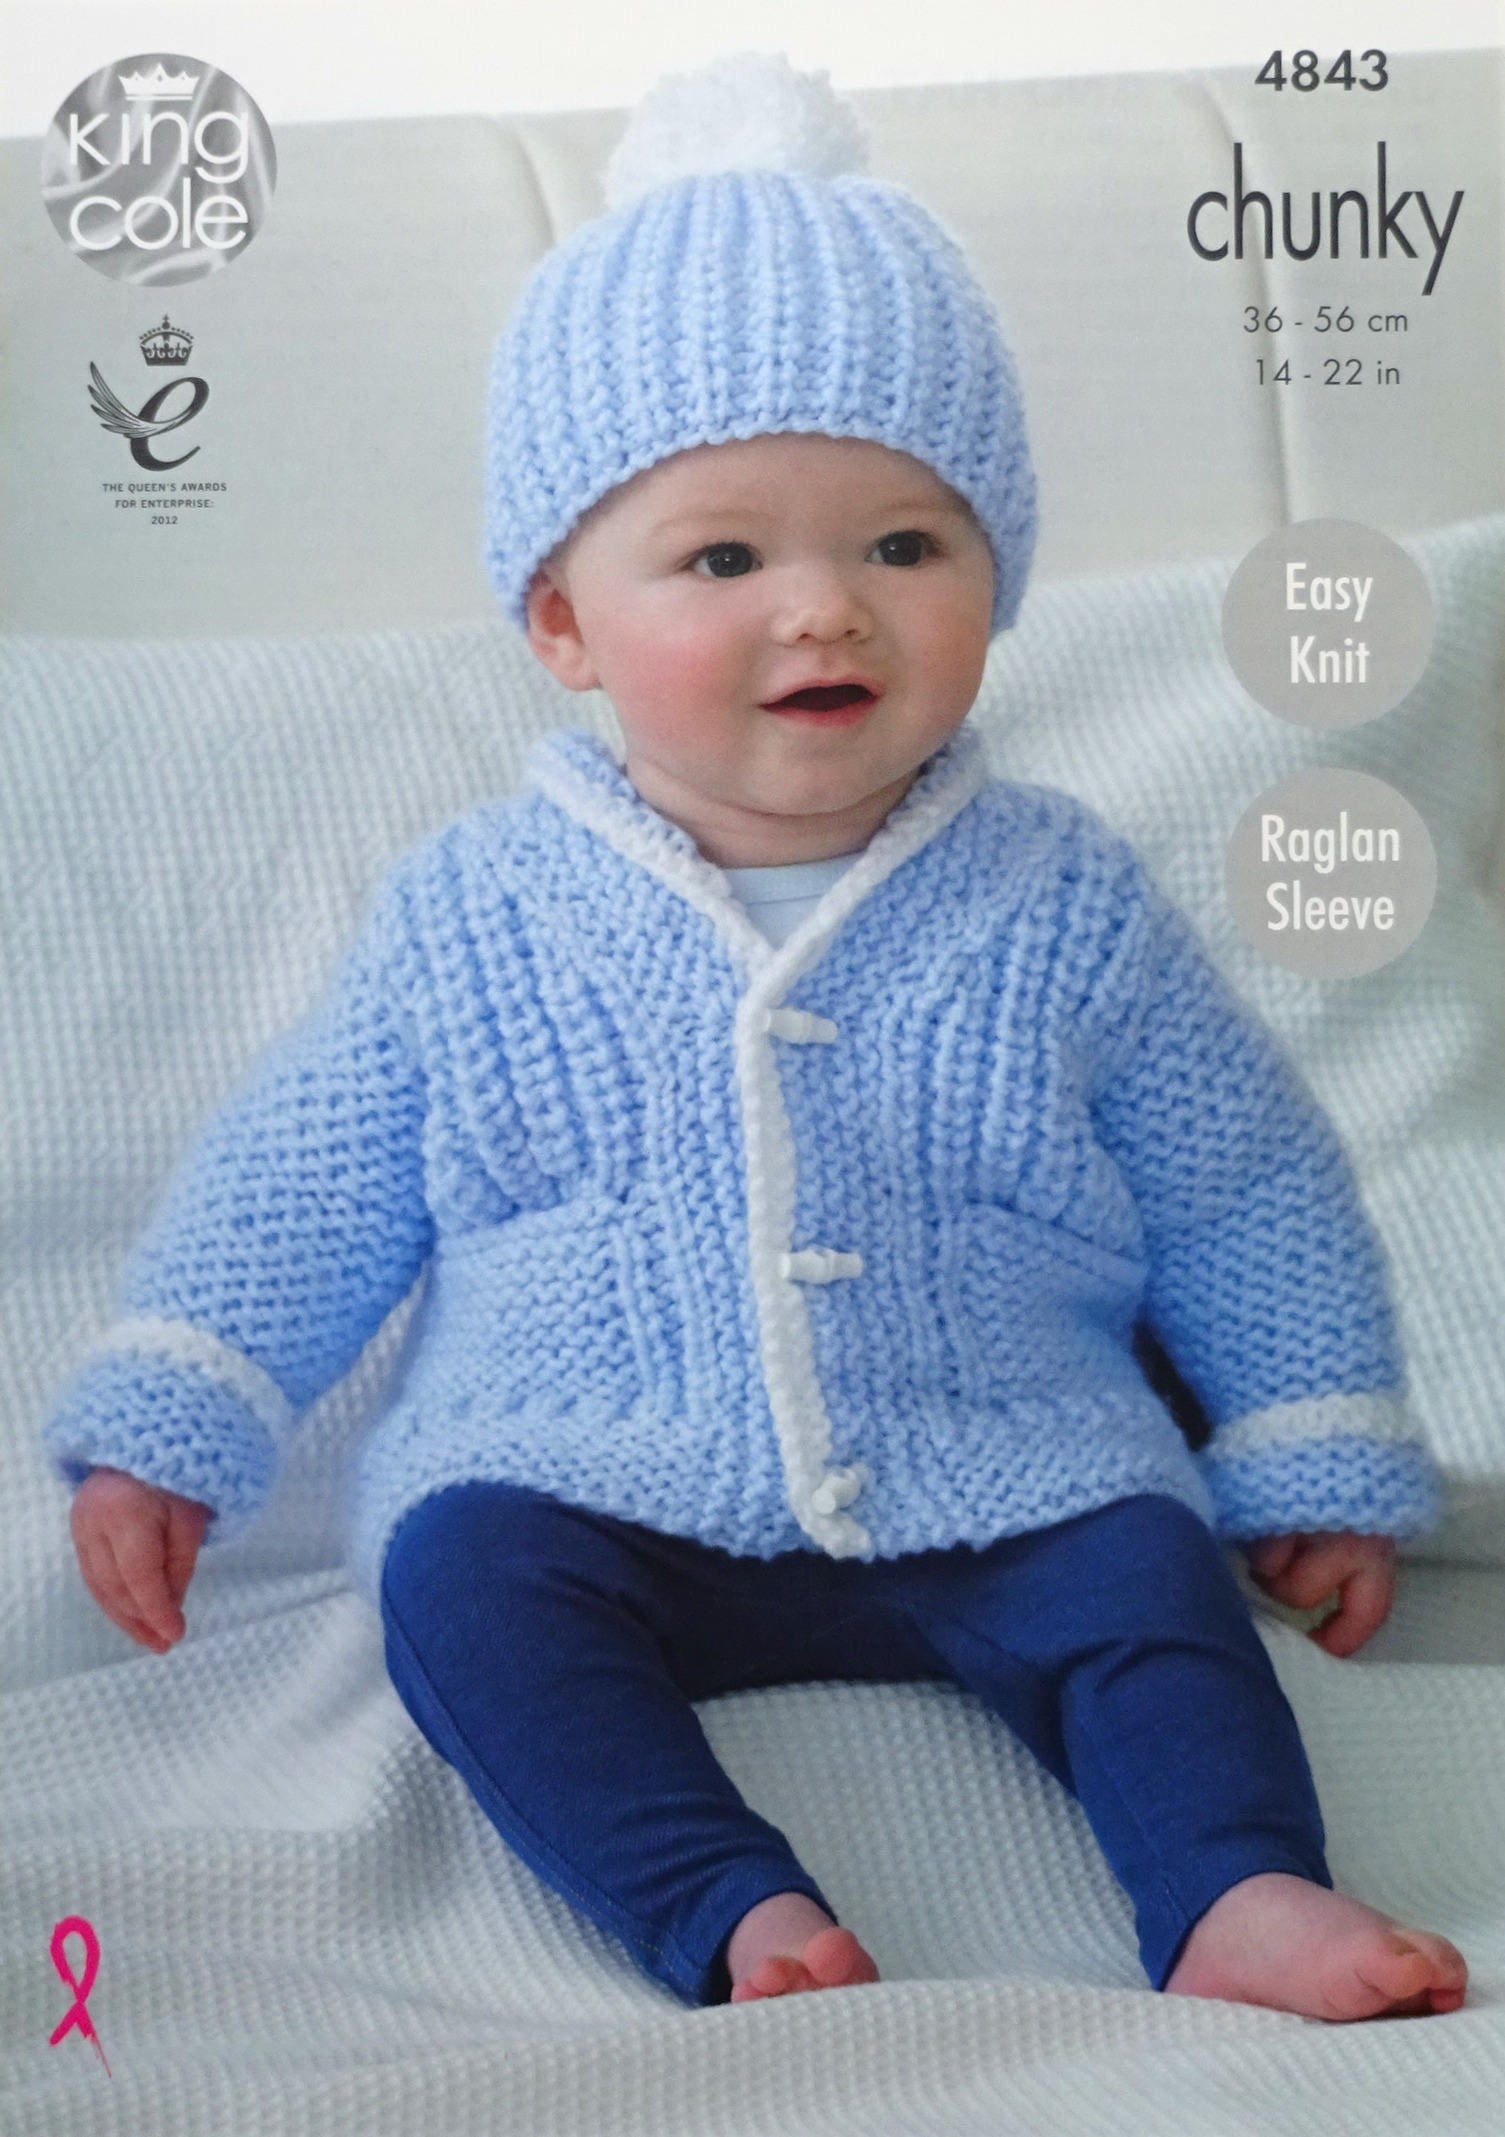 Baby Knitting Pattern K4843 Babies Easy Knit Jacket Hat and | Etsy UK